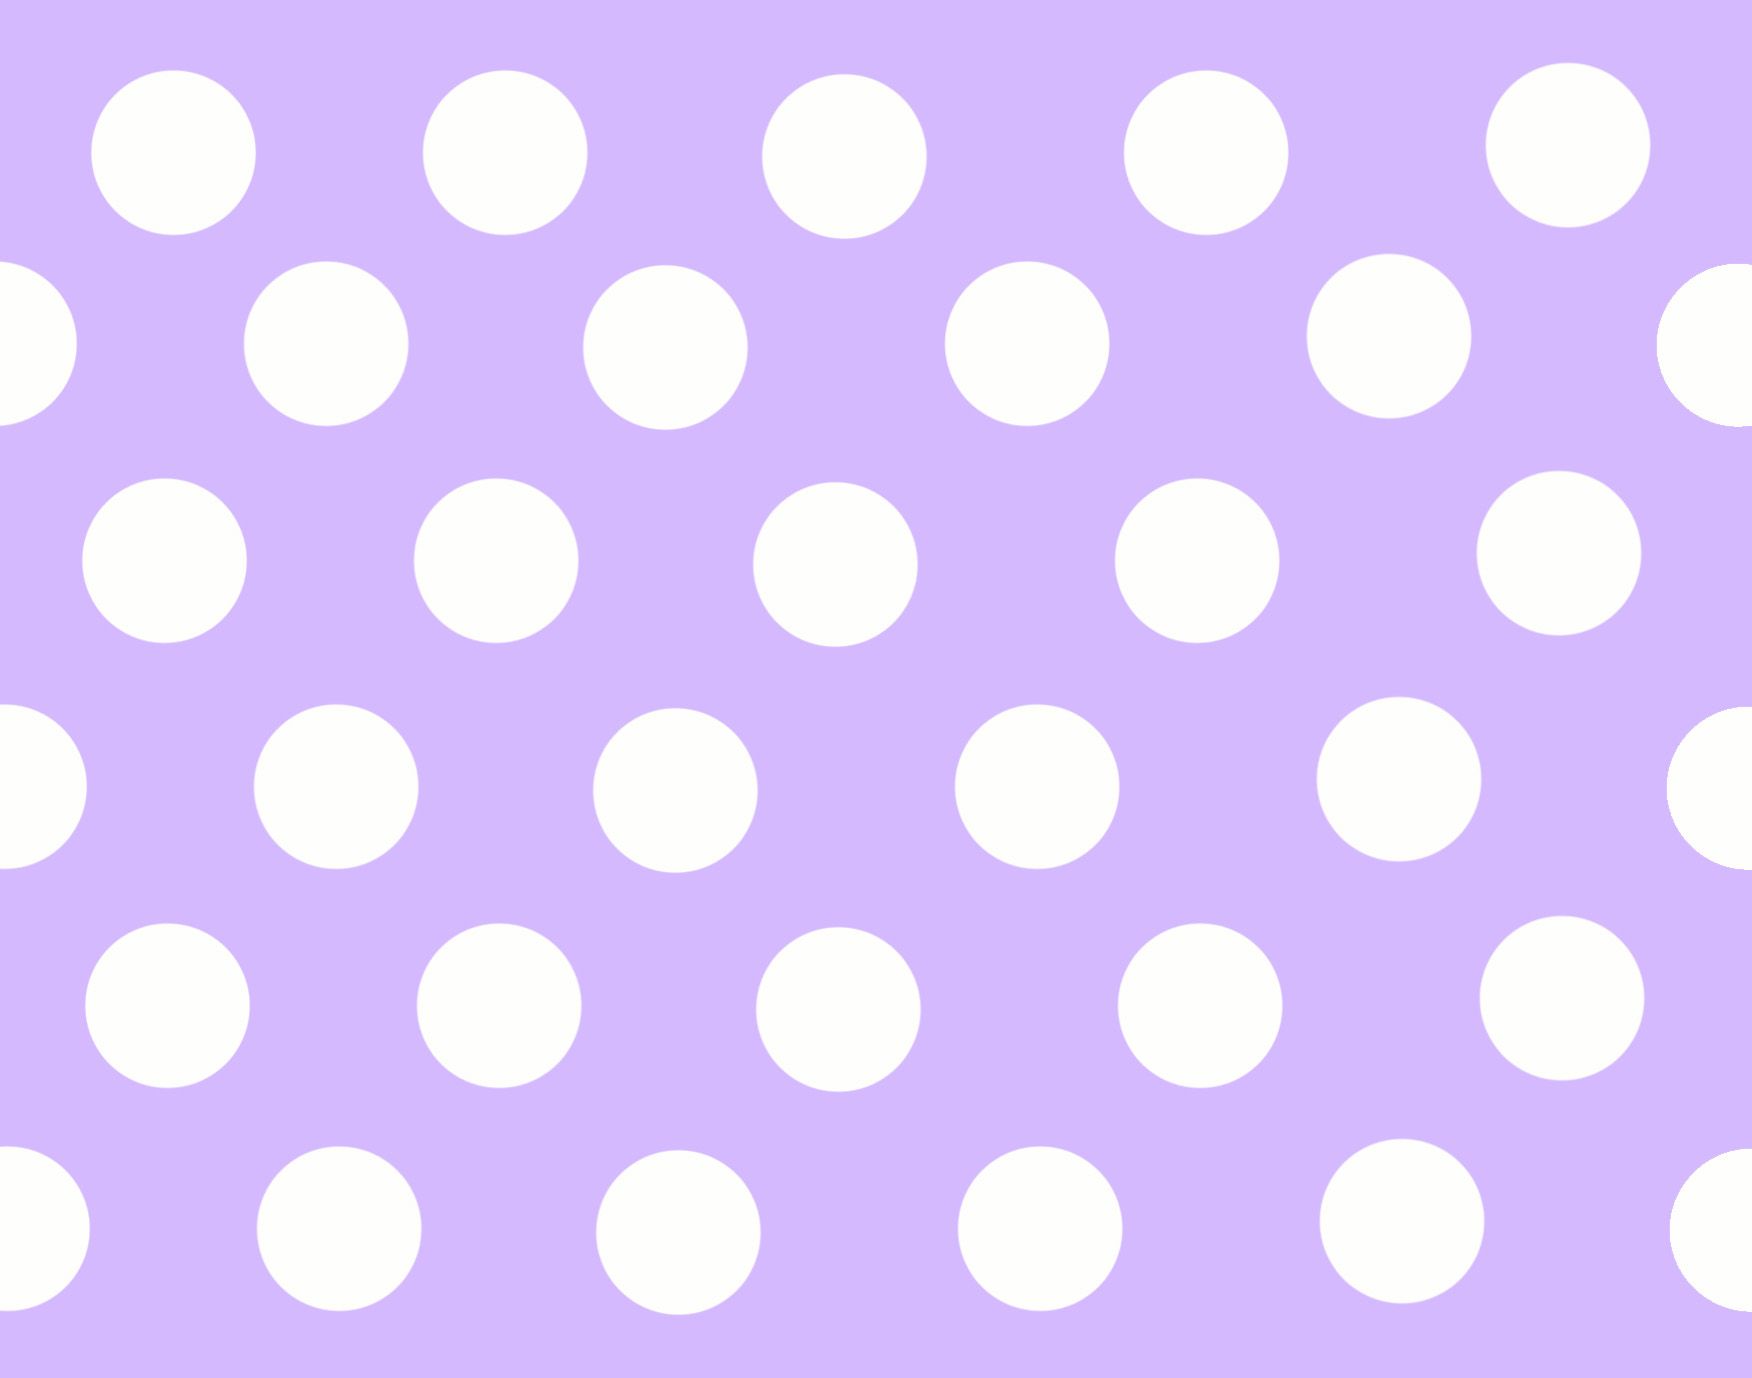 8. Black and Purple Polka Dot Nail Design - wide 3